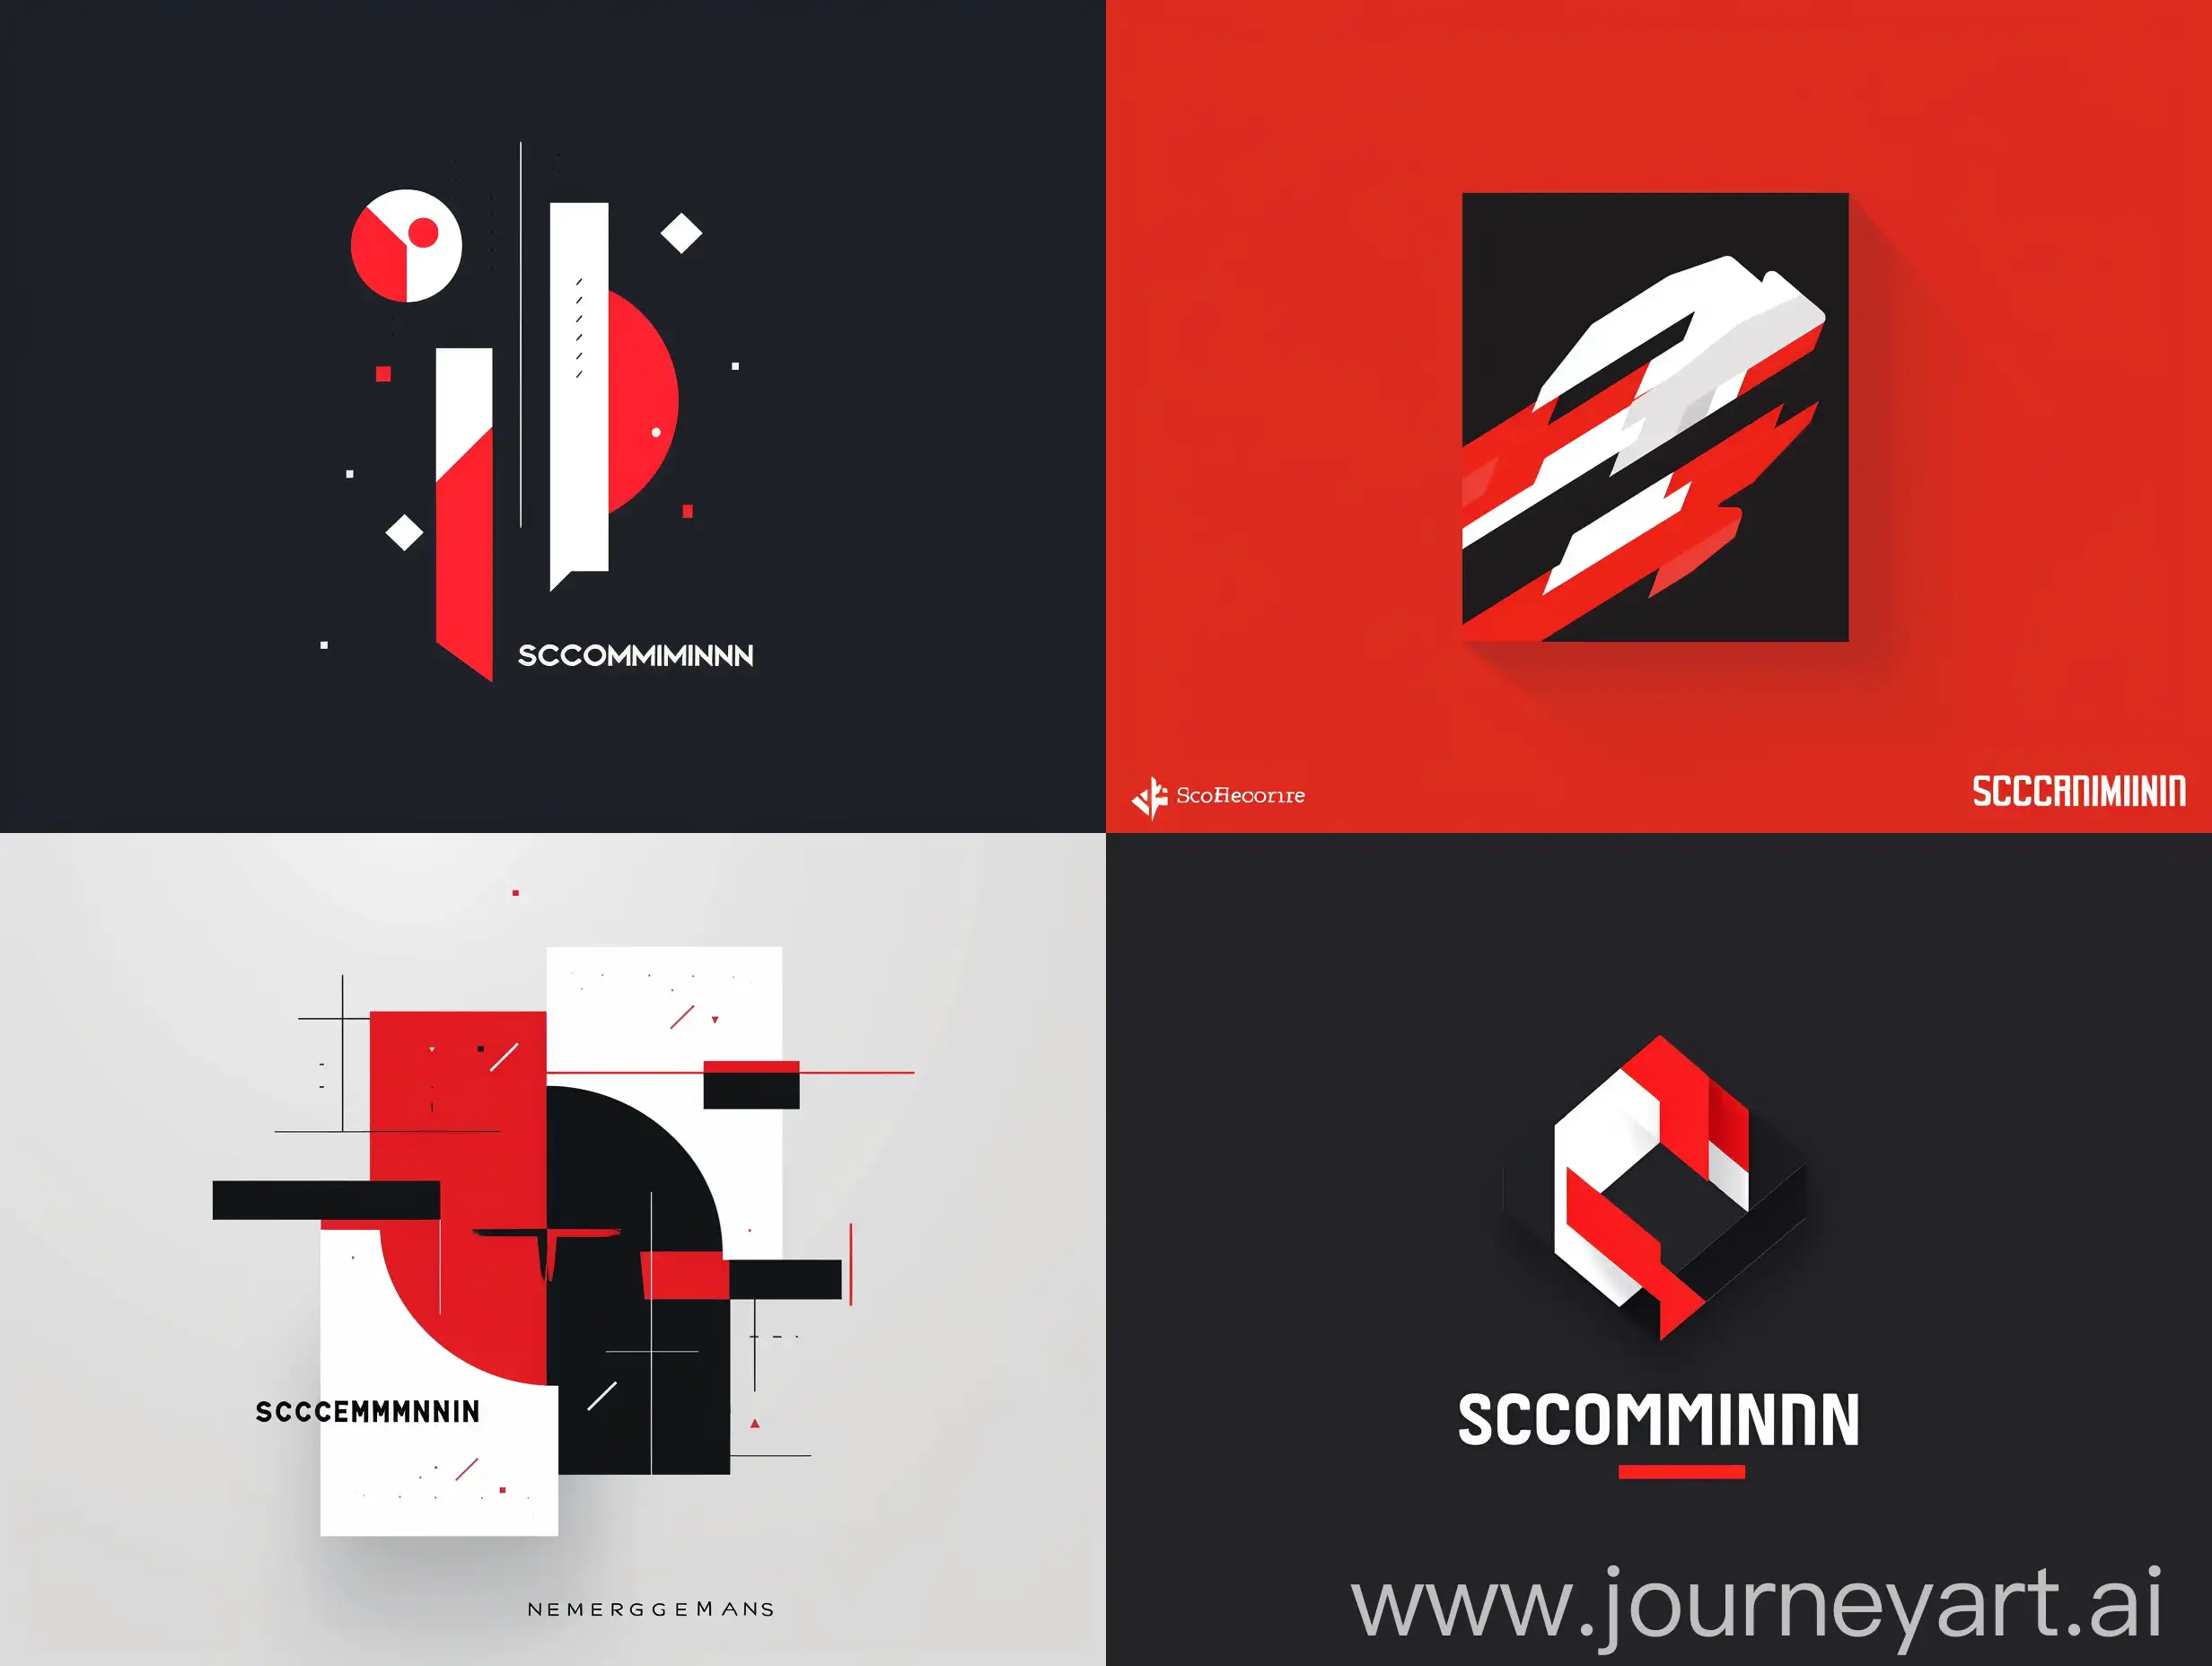 Dynamic-Red-and-Black-SCOREMINDS-Marketing-Logo-with-Minimalist-Design